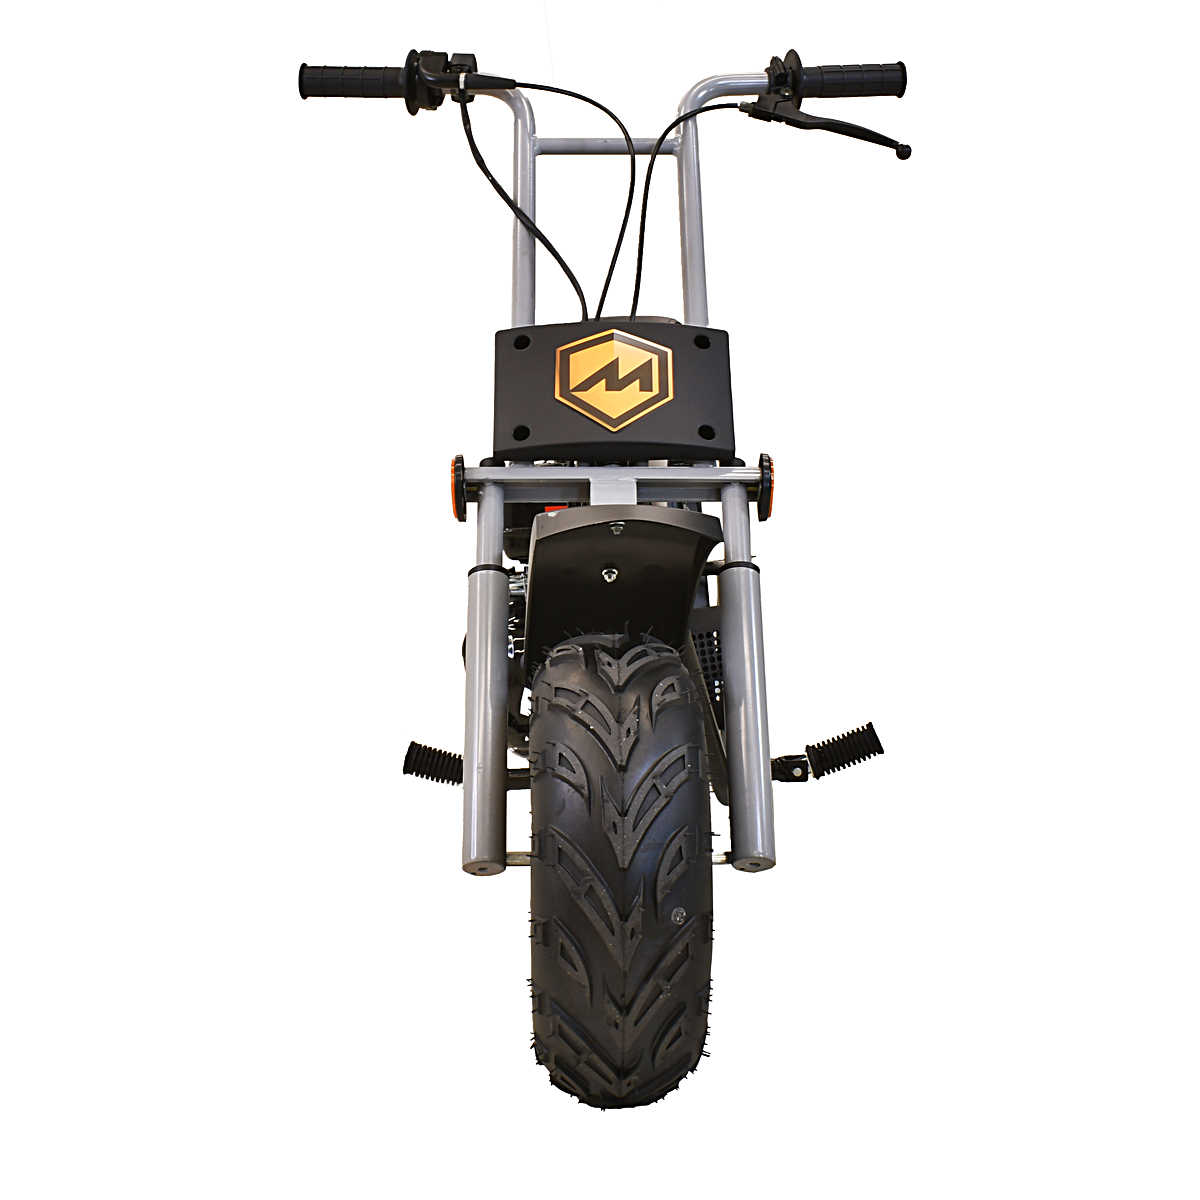 Massimo Motor MB100 2.5 HP 79cc 4-Stroke Gas Powered Mini Bike Motorcycle Trail Bike (Black) - image 2 of 8